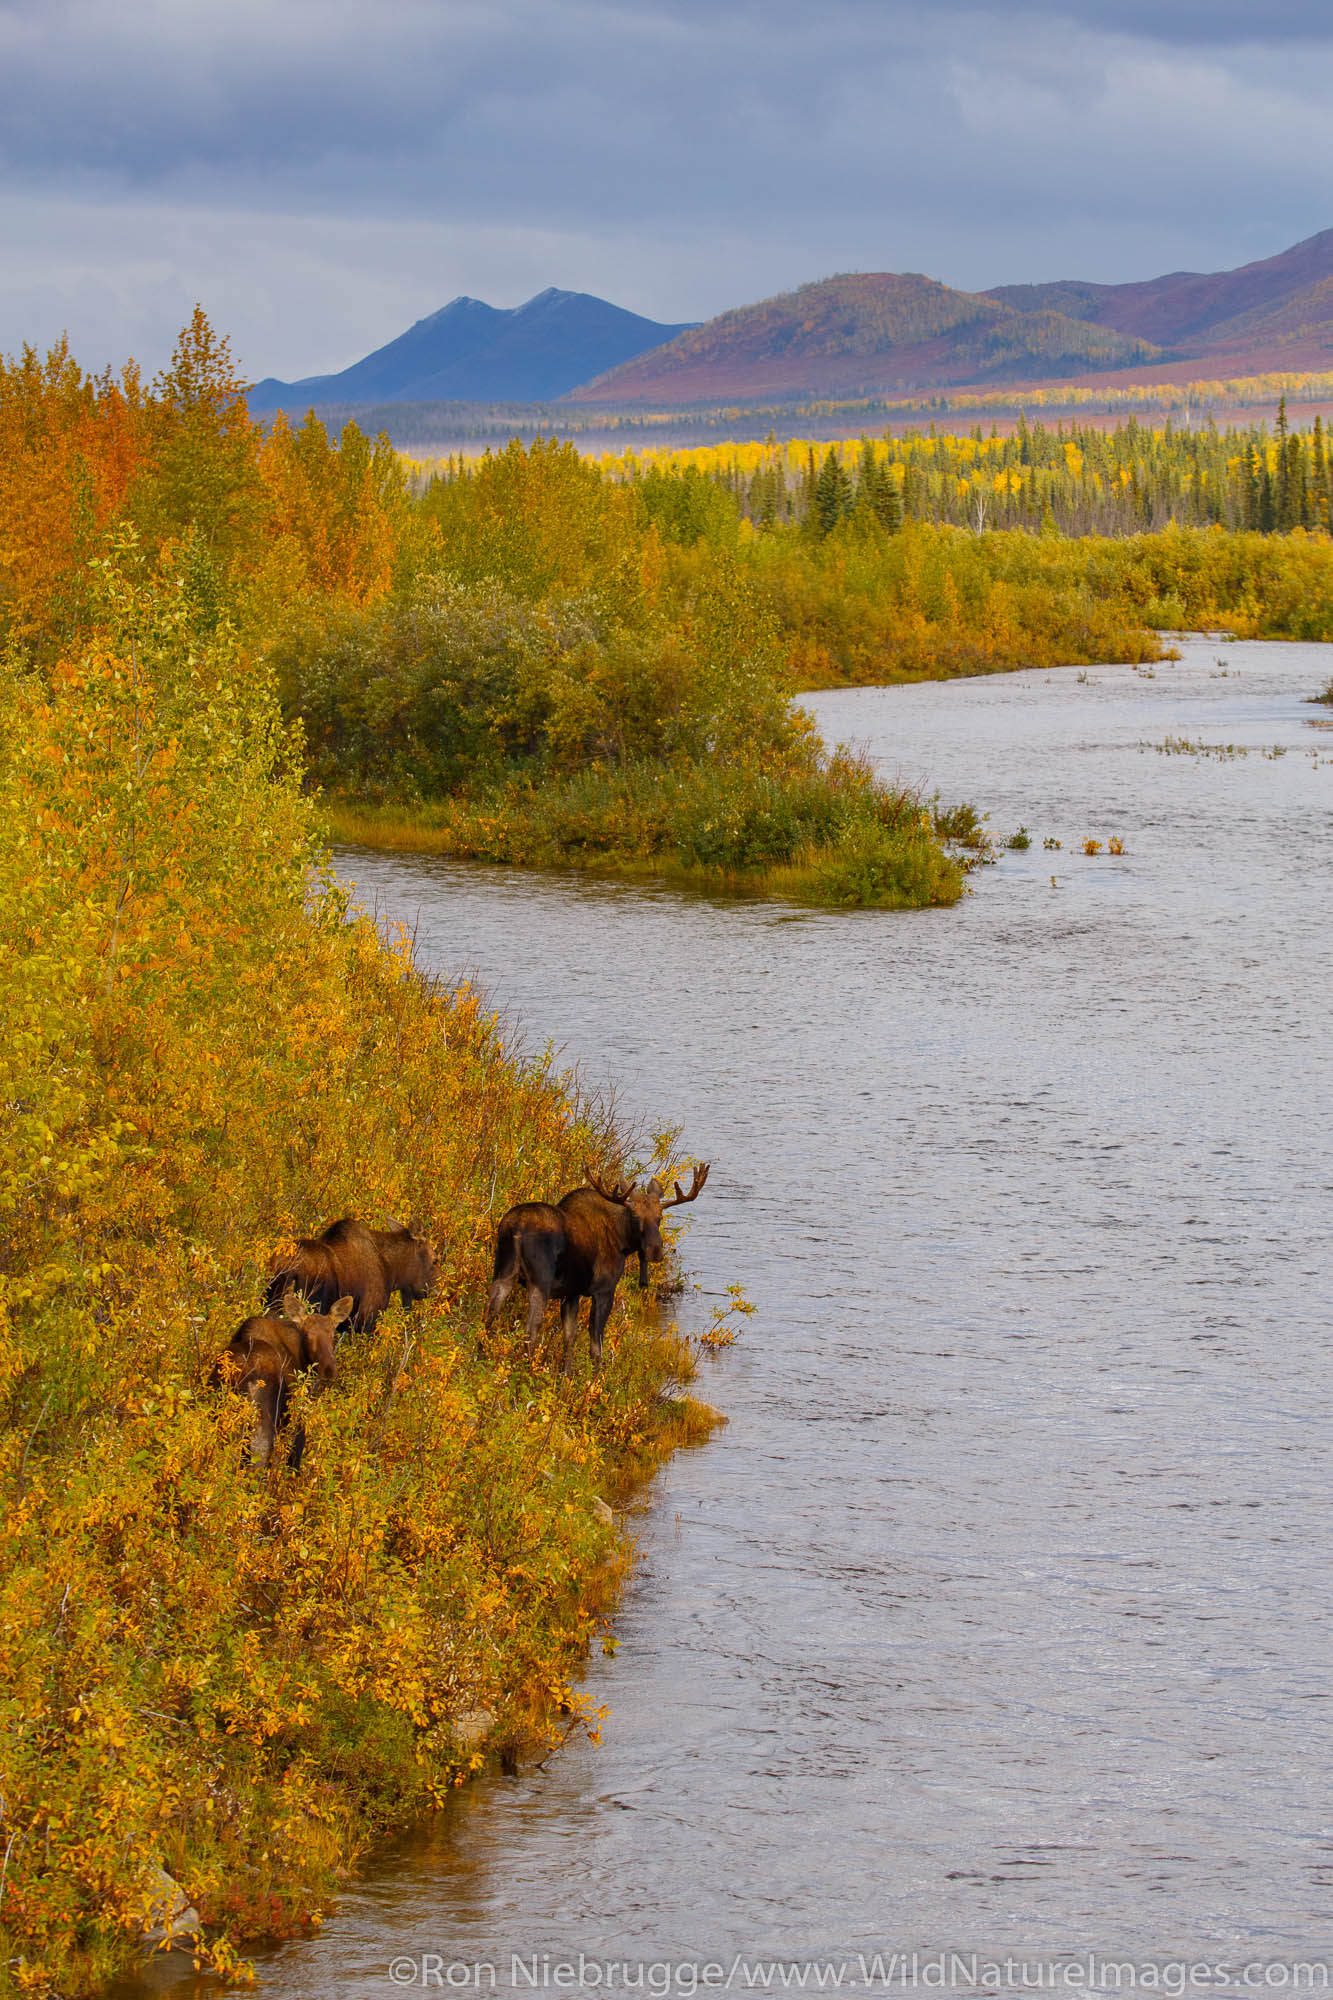 Moose in the autumn colors along the Dalton Highway, Alaska.